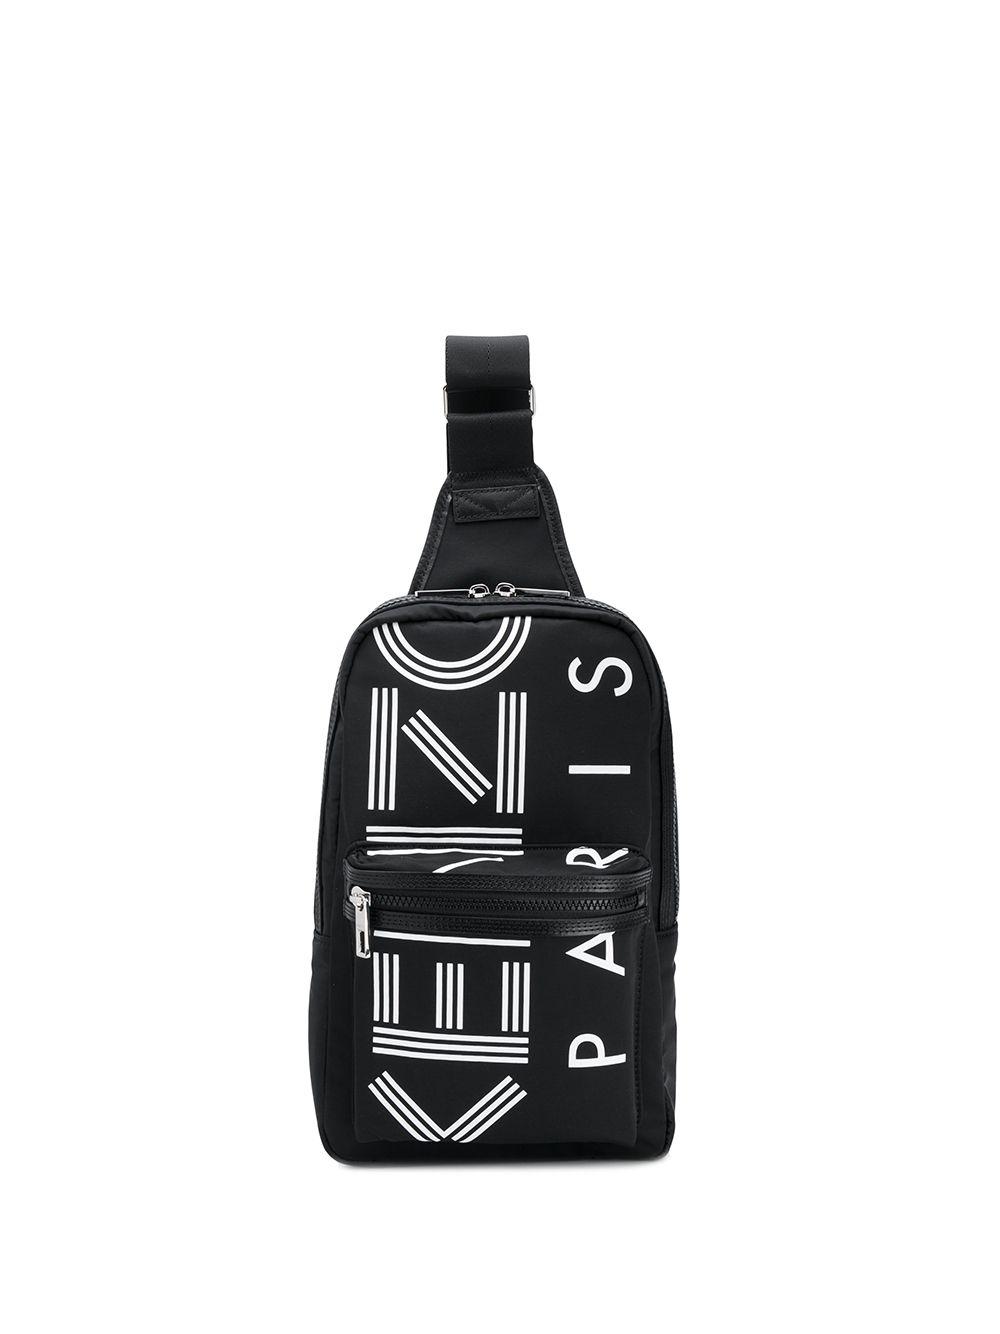 KENZO 'crew' Logo Cross-body Bag in Black for Men | Lyst Canada